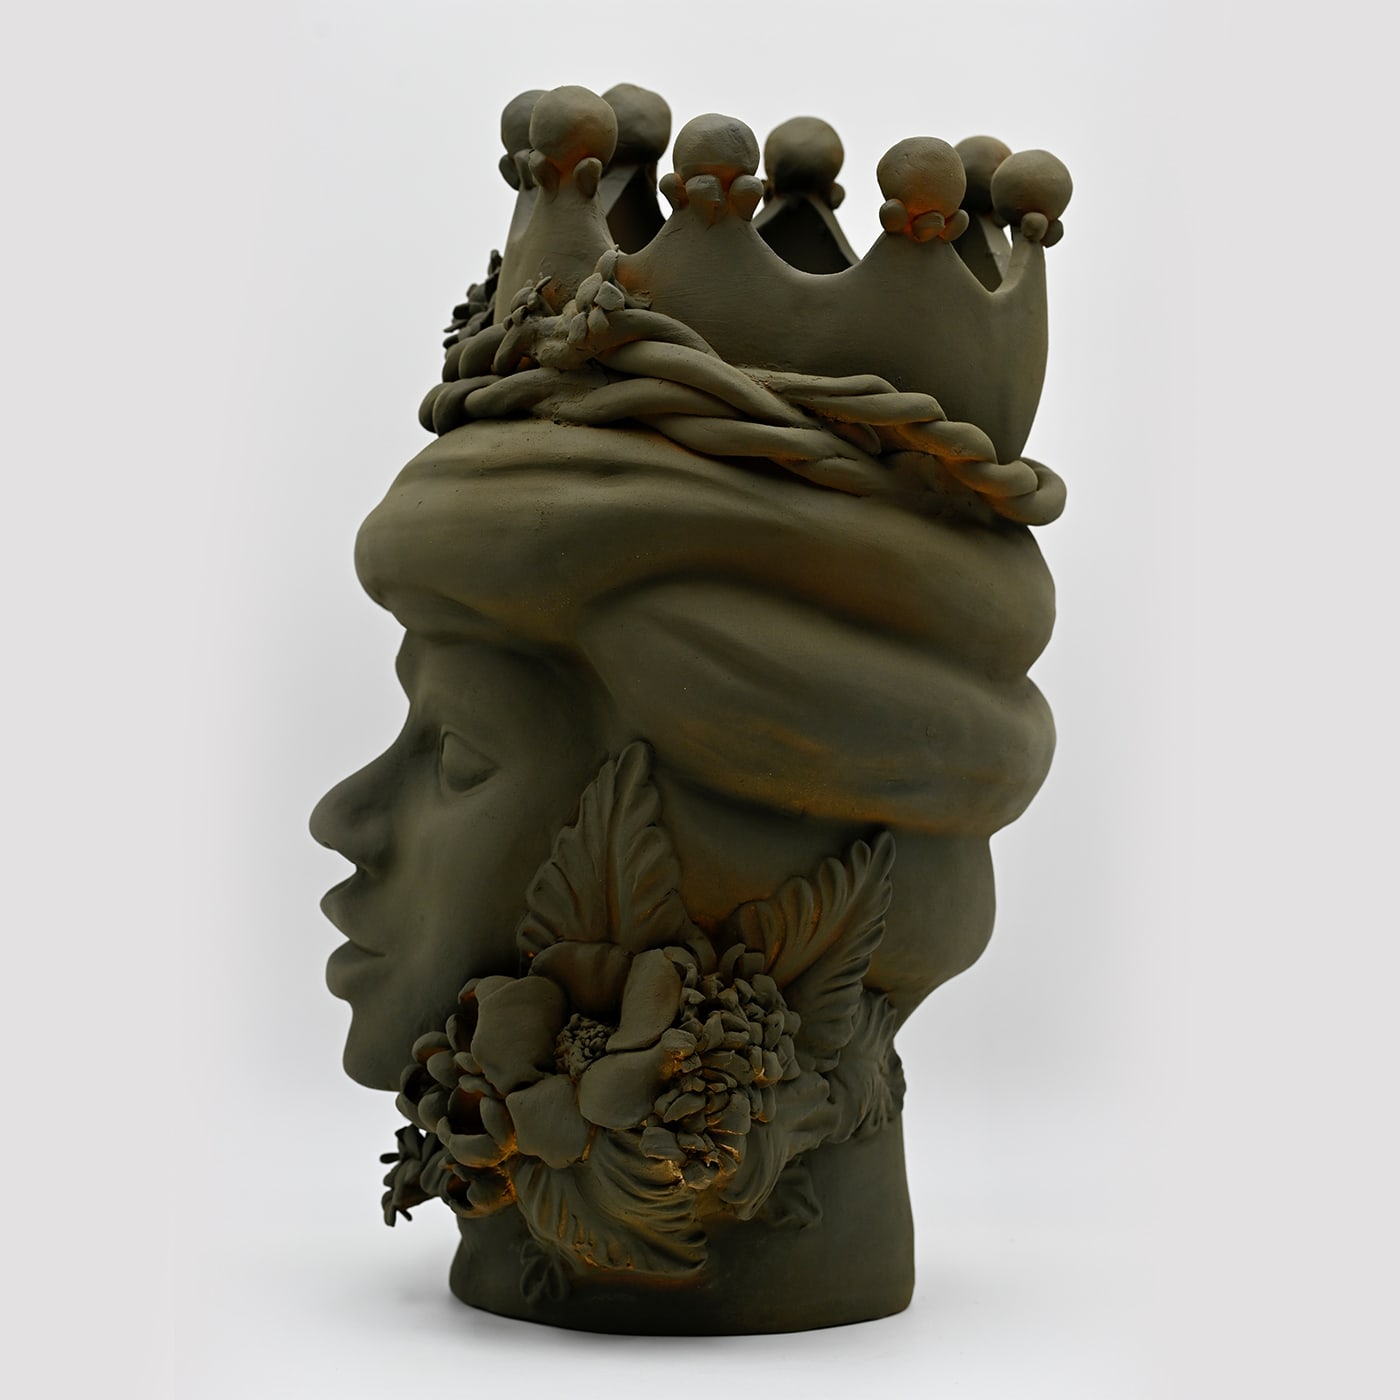 Artisan Crafted Moor's Head Sculpture